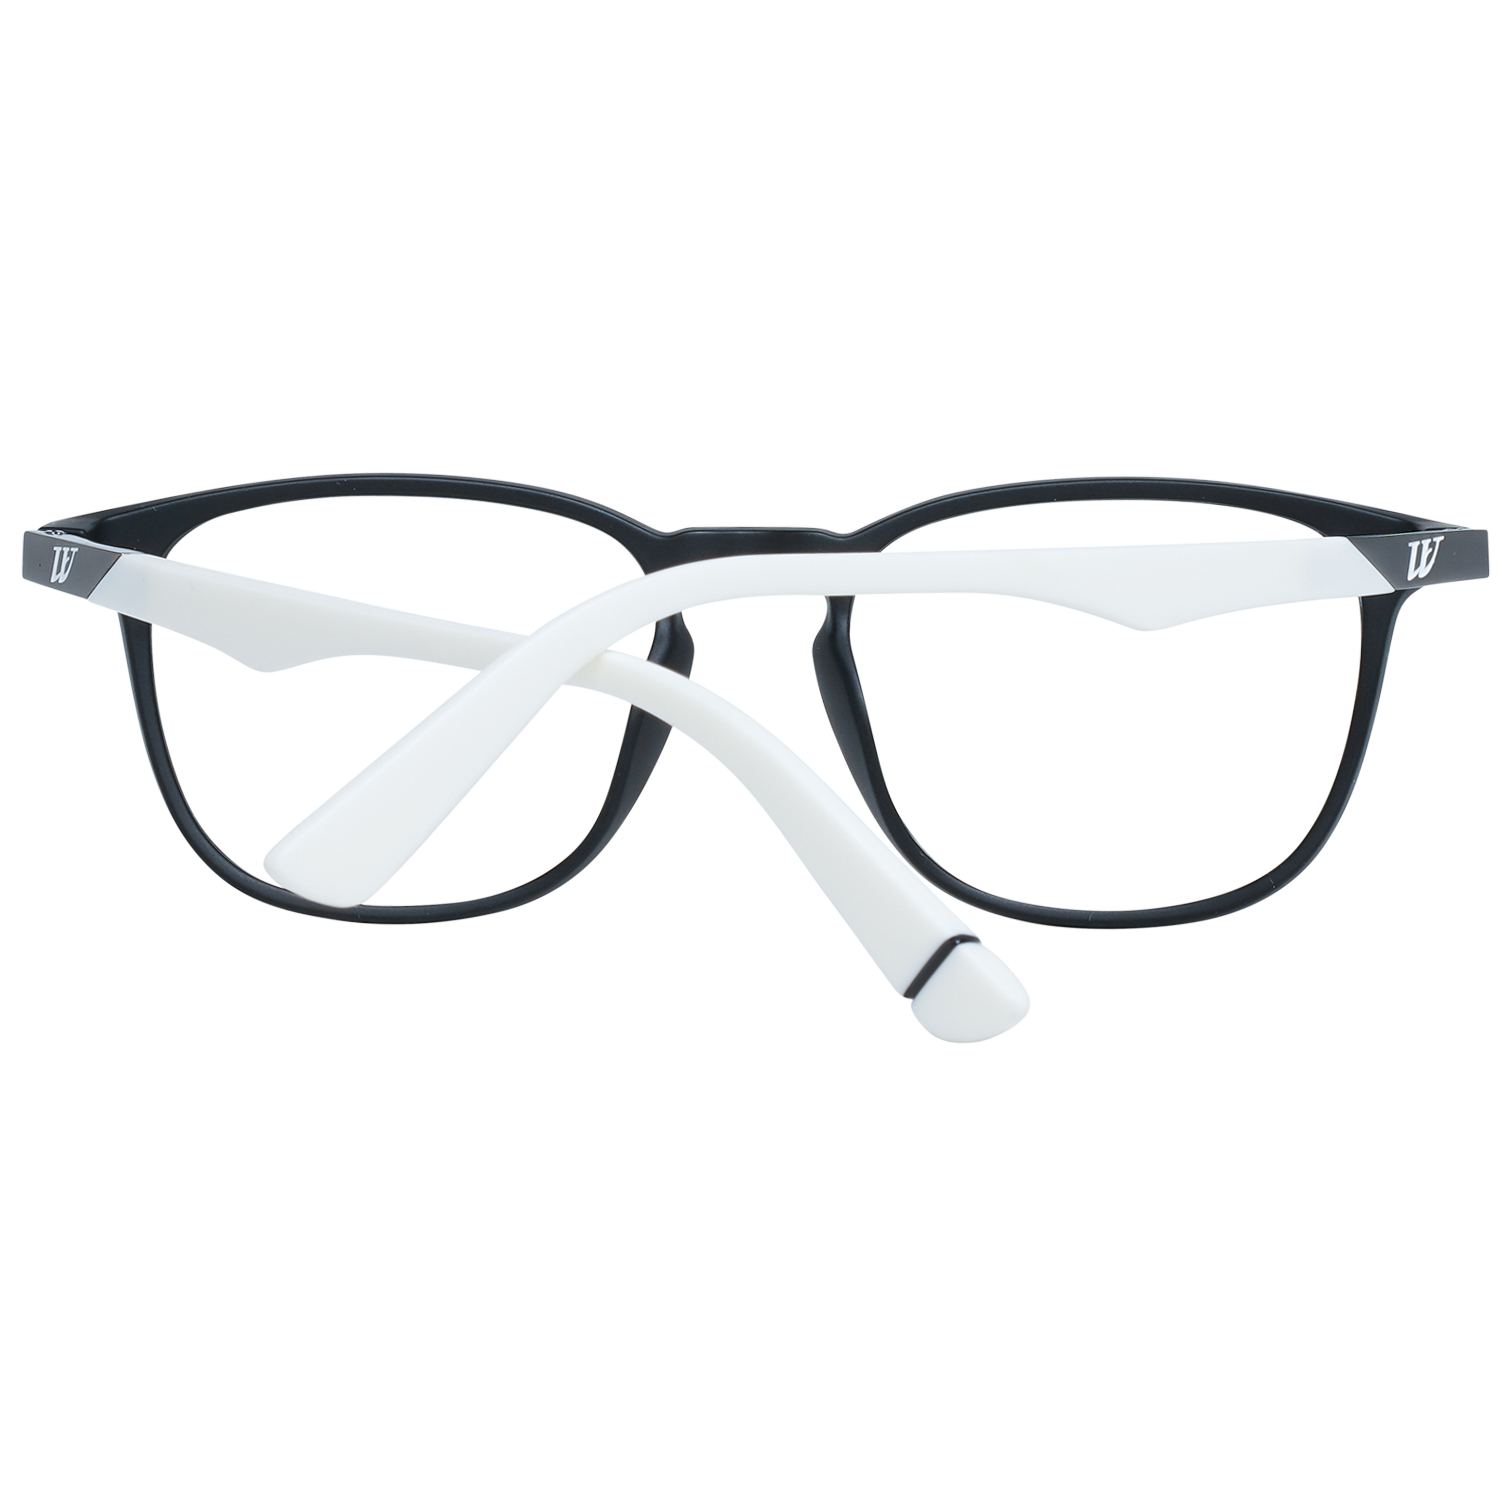 Web Frames Web Prescription Glasses Optical Frame WE5327 005 52 Eyeglasses Eyewear UK USA Australia 